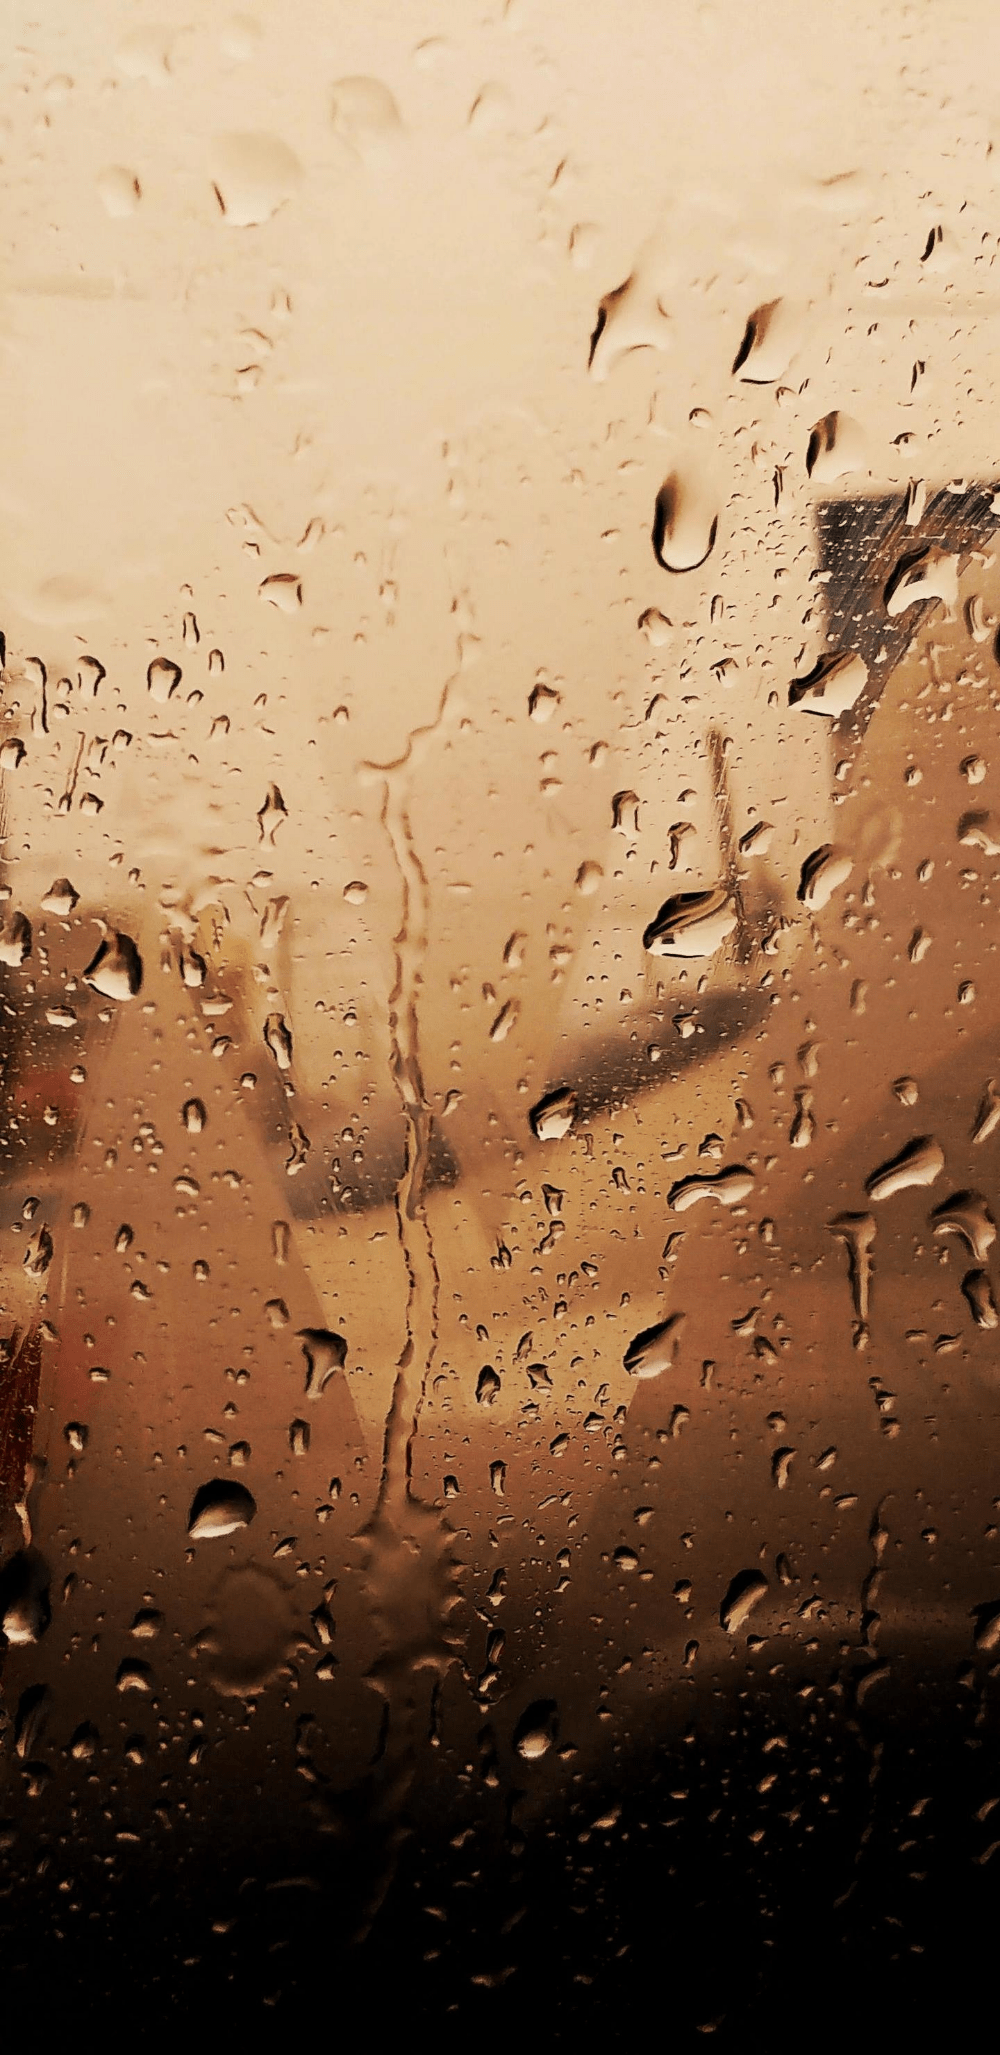 Windshield rain wallpaper. Обои, Розовые блестки, Обои андроид